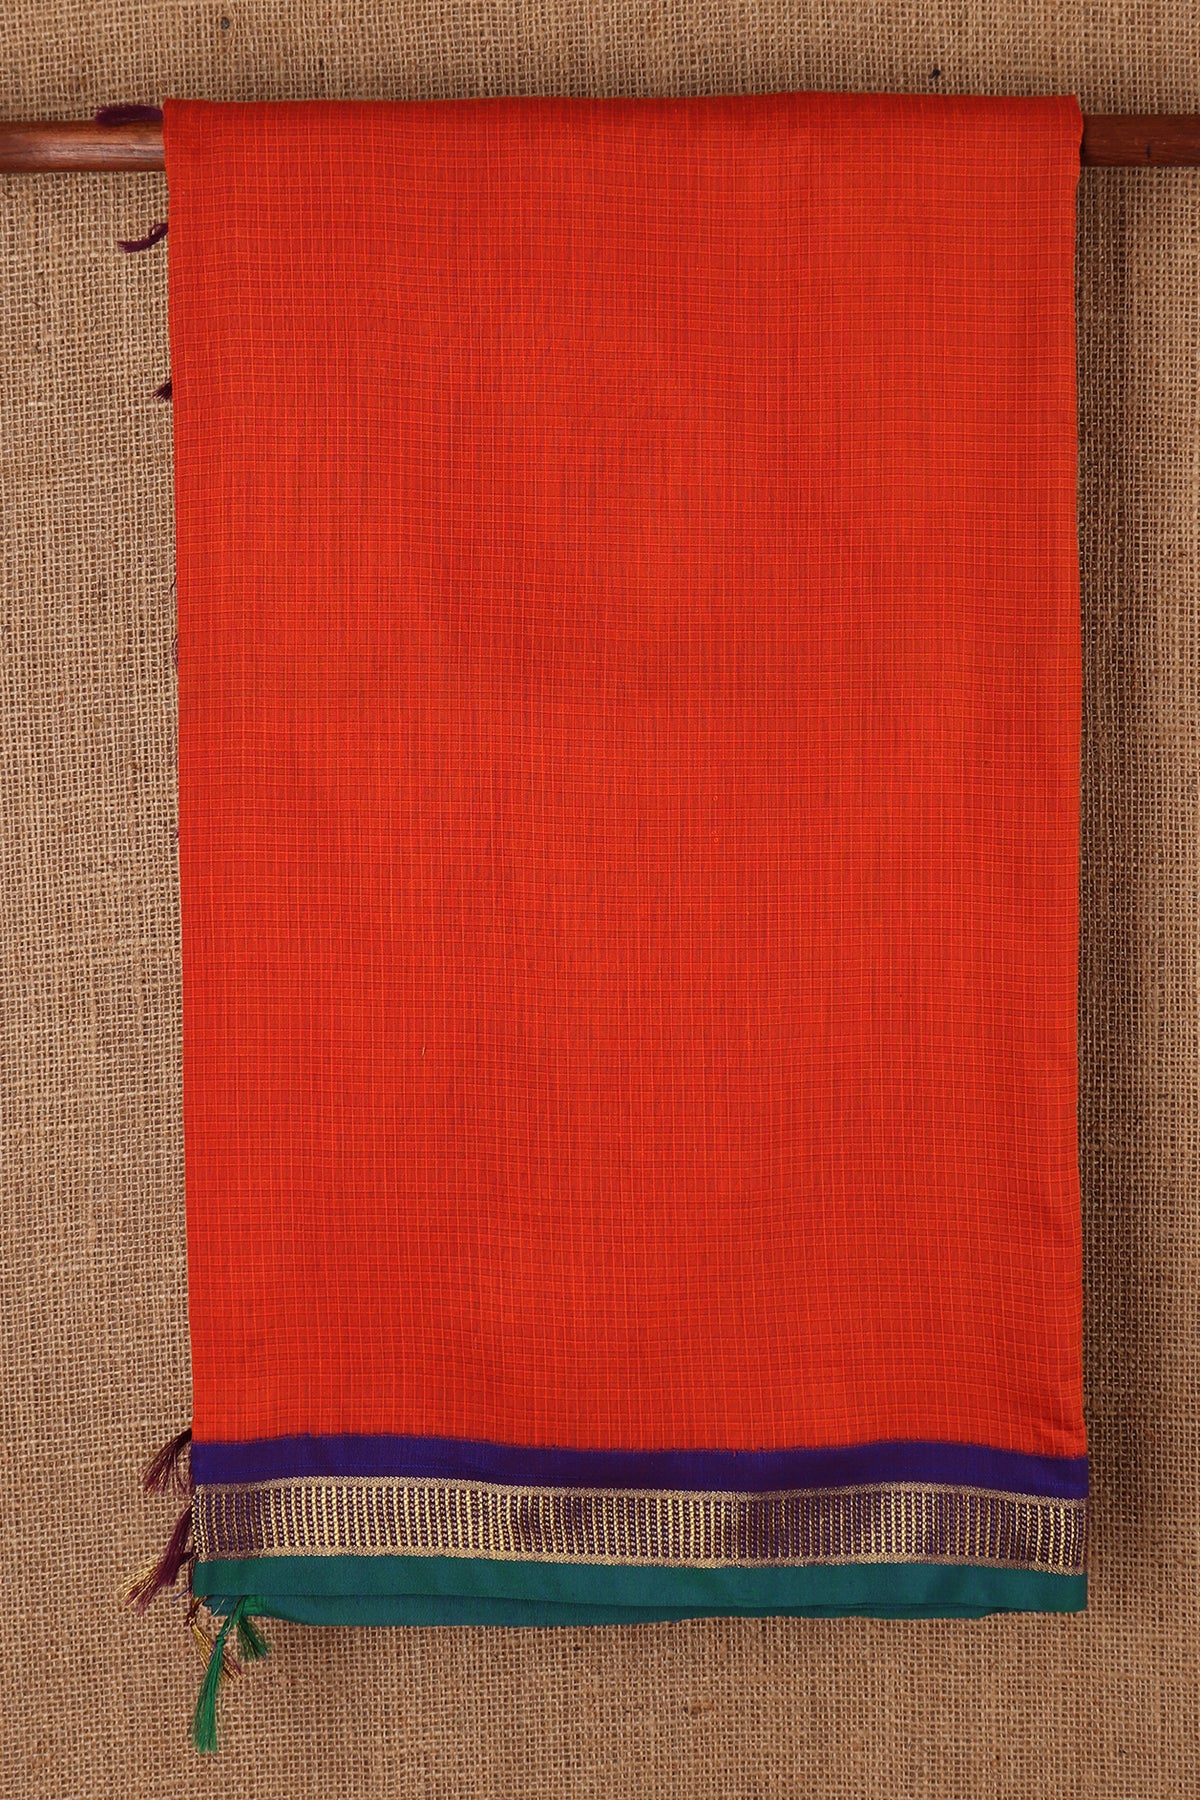 Small Border With Reddish Orange Kalyani Cotton Saree